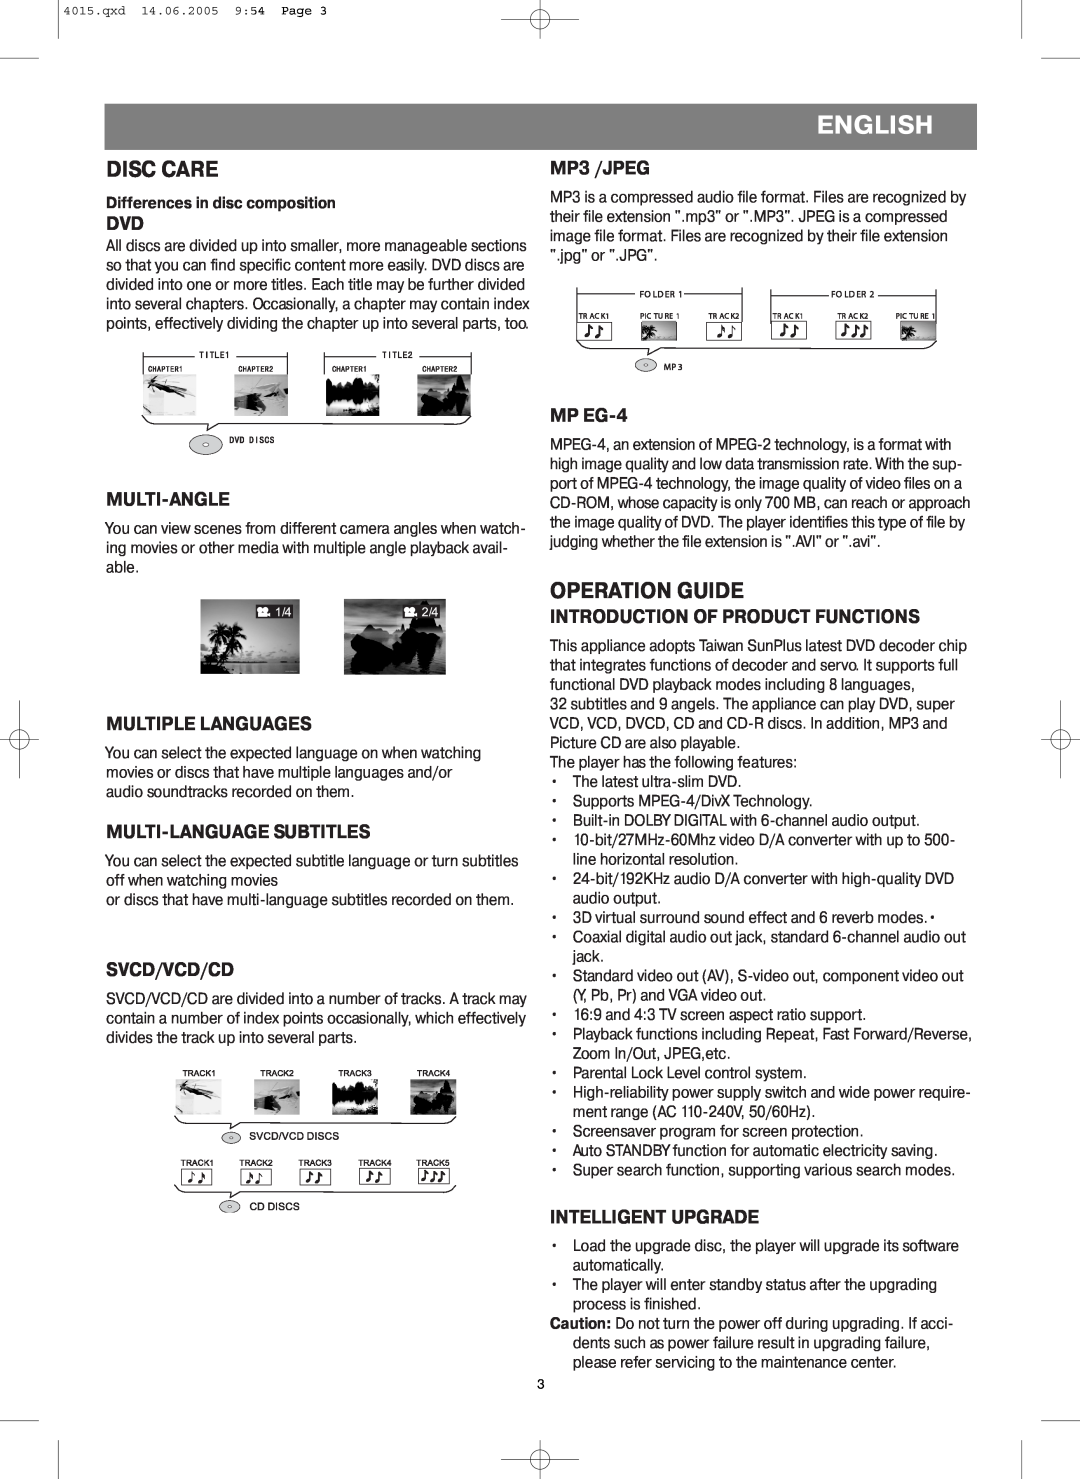 LG Electronics VT 4015 Disc Care, Operation Guide, MP3 /JPEG, Multingle, Multiple Languages, Multianguage Subtitles, Mp Eg 